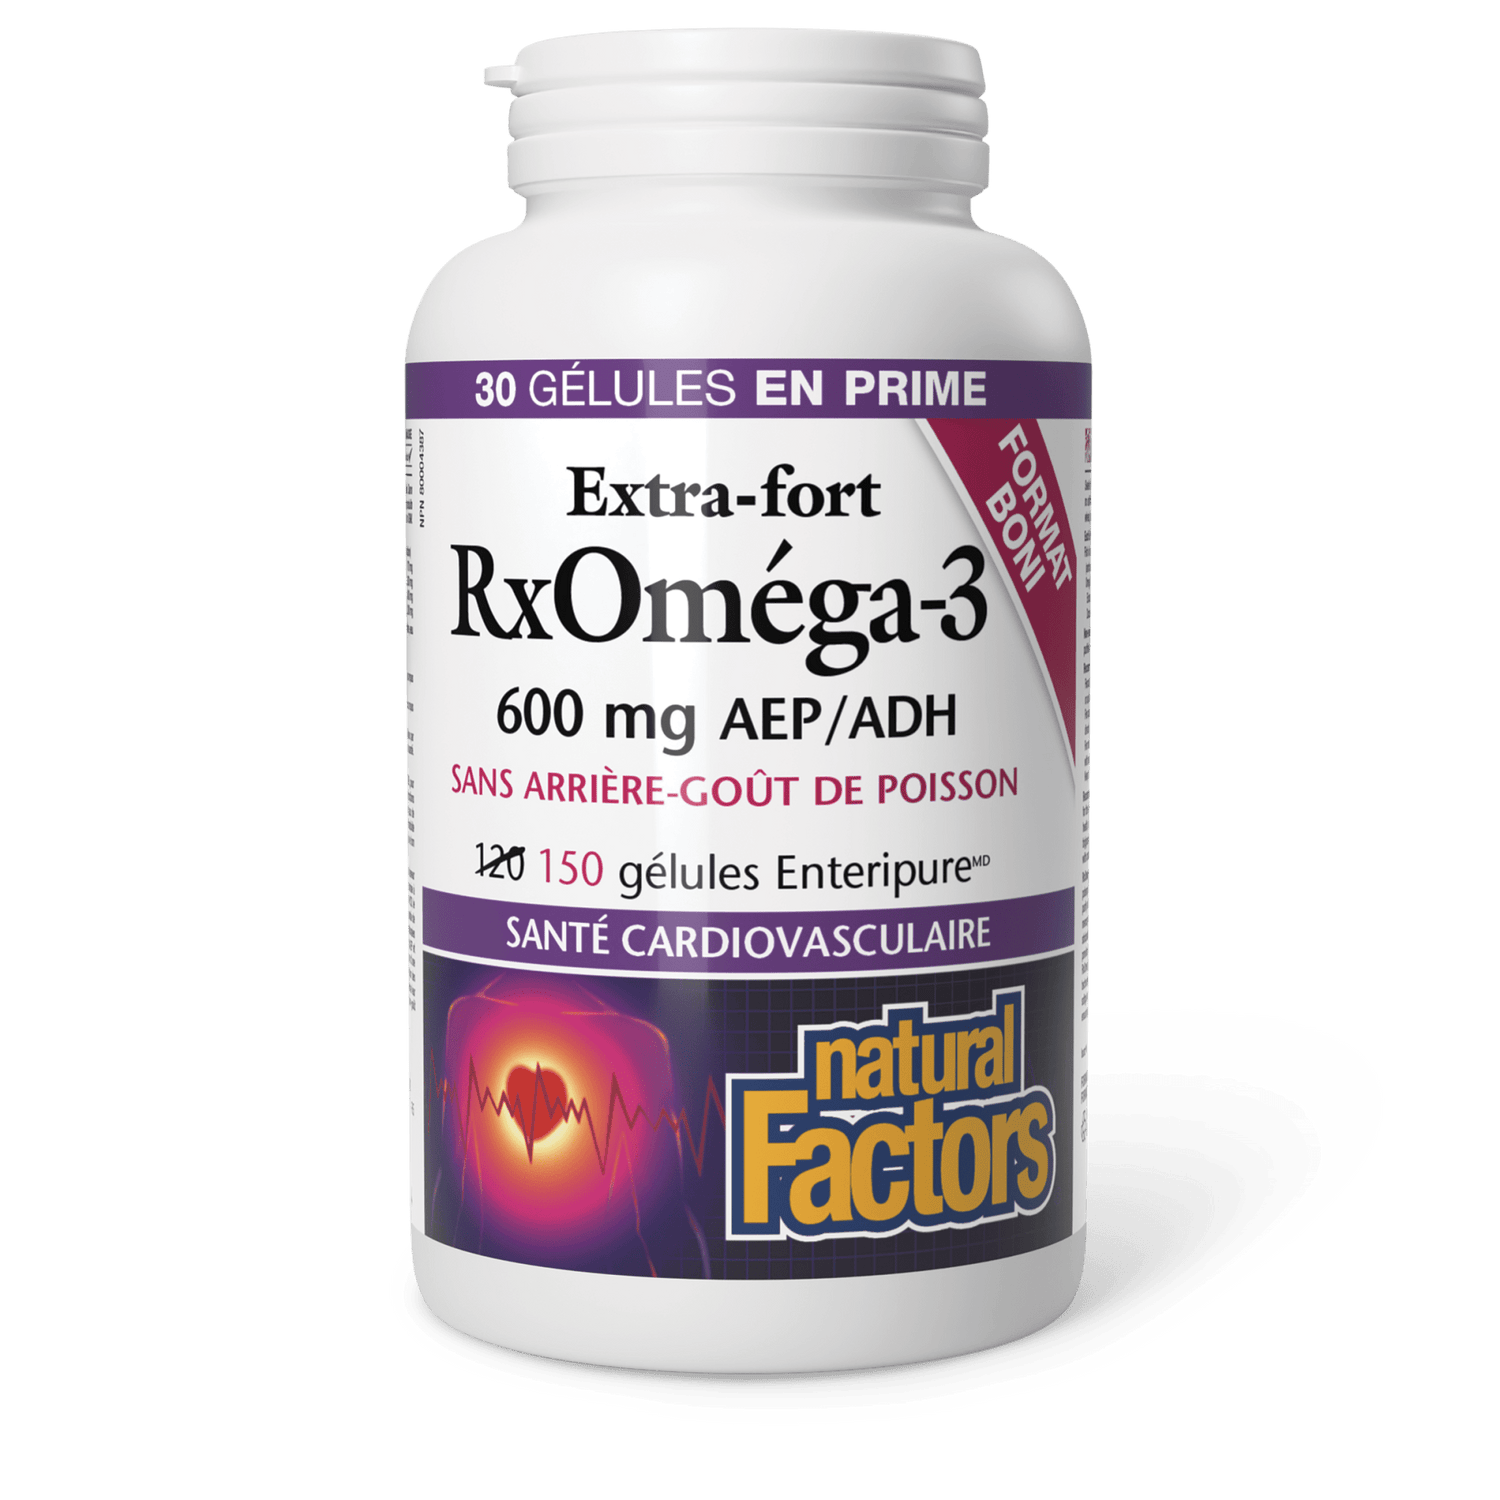 RxOméga-3 Extra-fort 600 mg, Natural Factors|v|image|8354